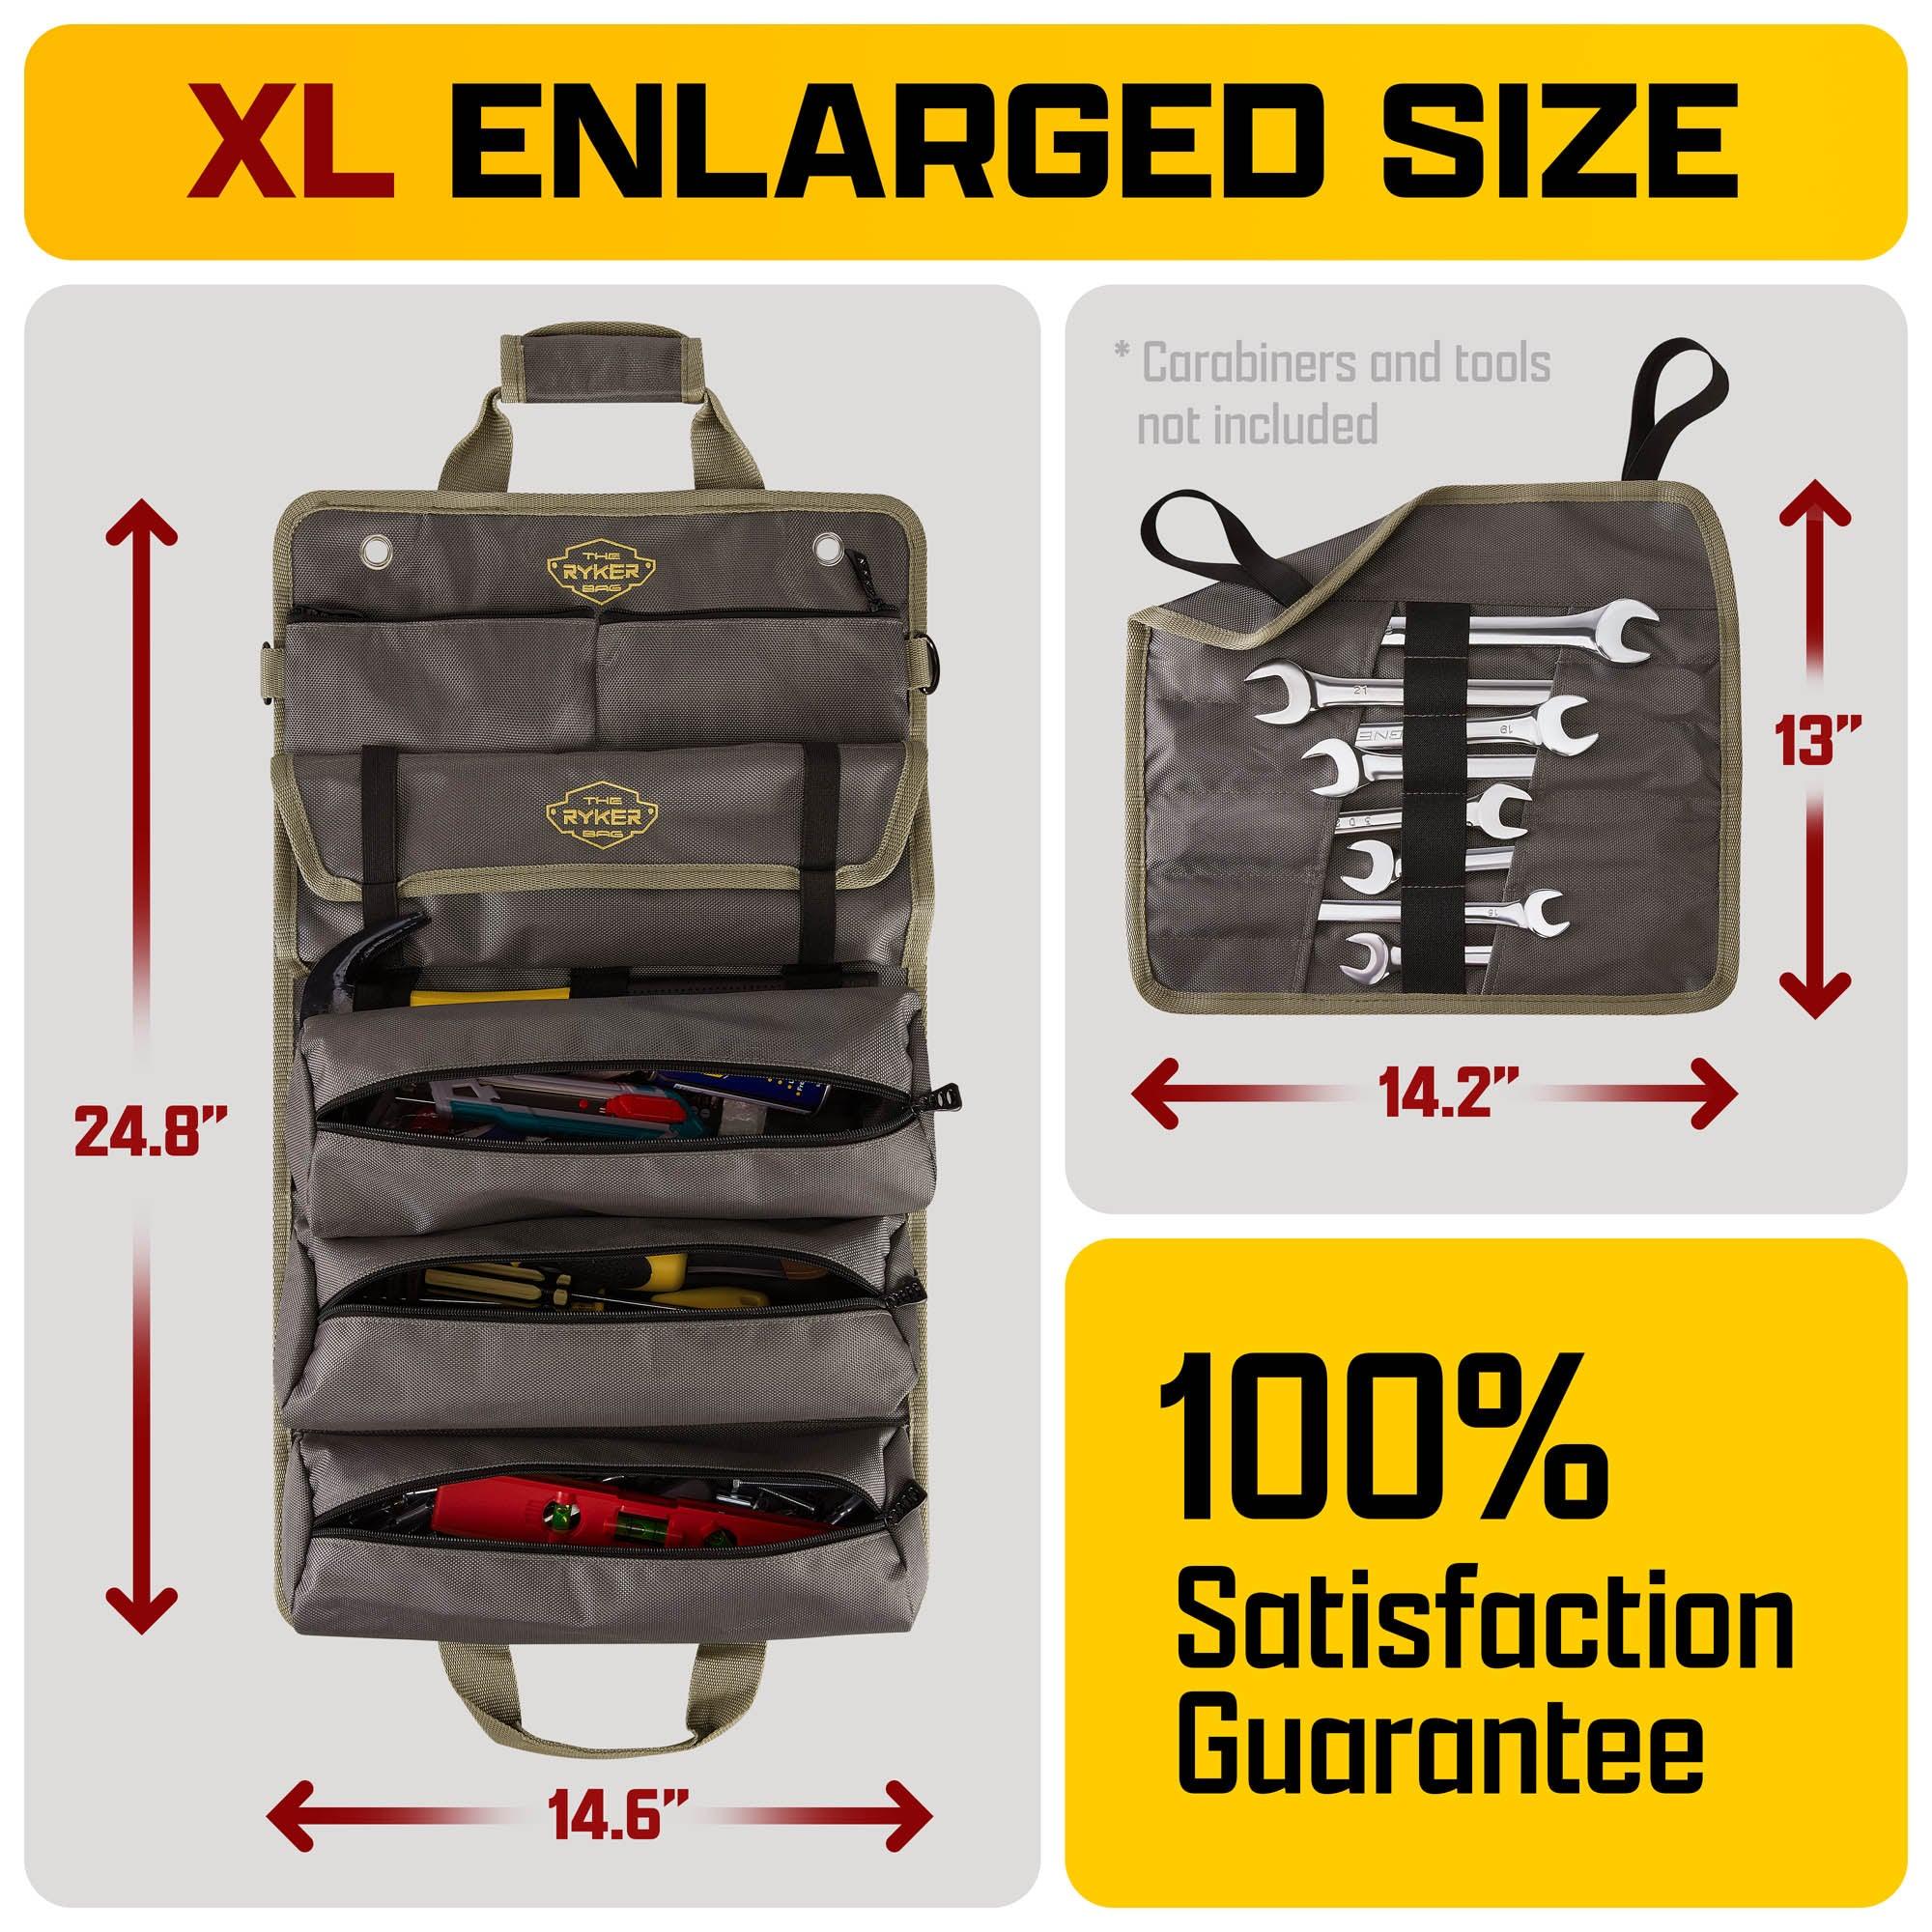 The Ryker Bag's Tool Roll-Up Bag XL